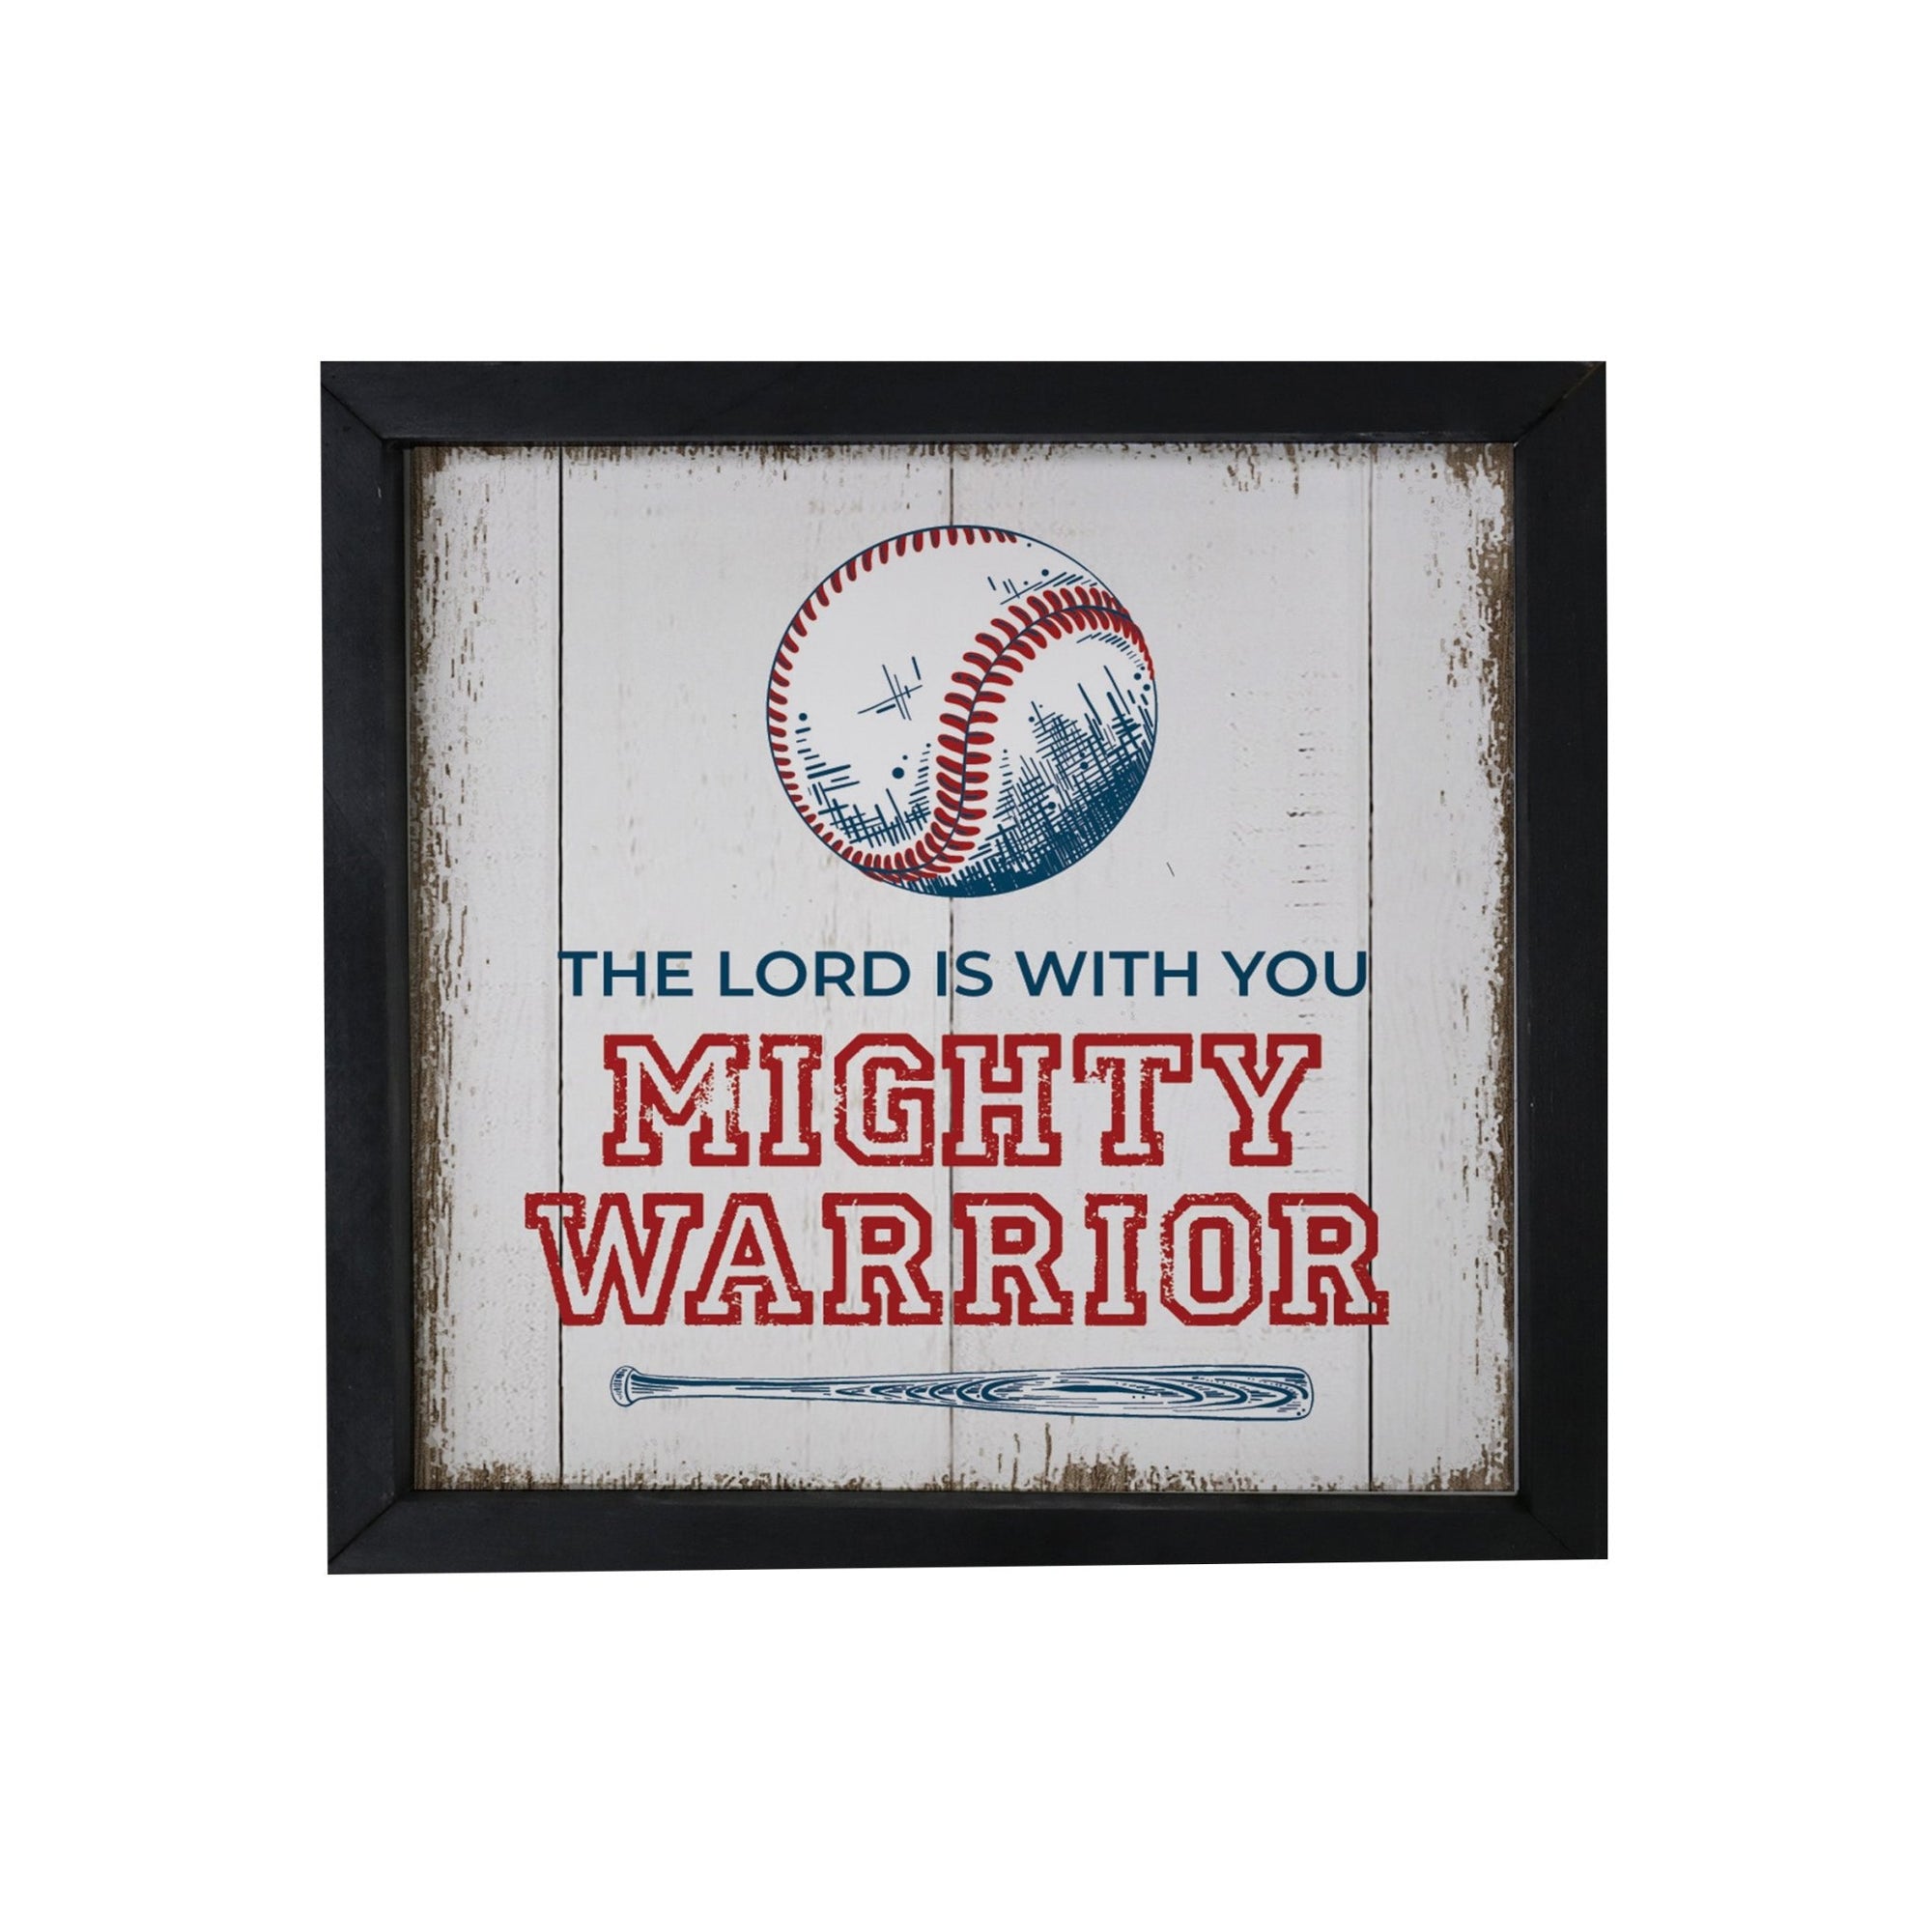 Elegant Baseball Framed Shadow Box Shelf Décor With Inspiring Bible Verses - Mighty Warrior 2 - LifeSong Milestones